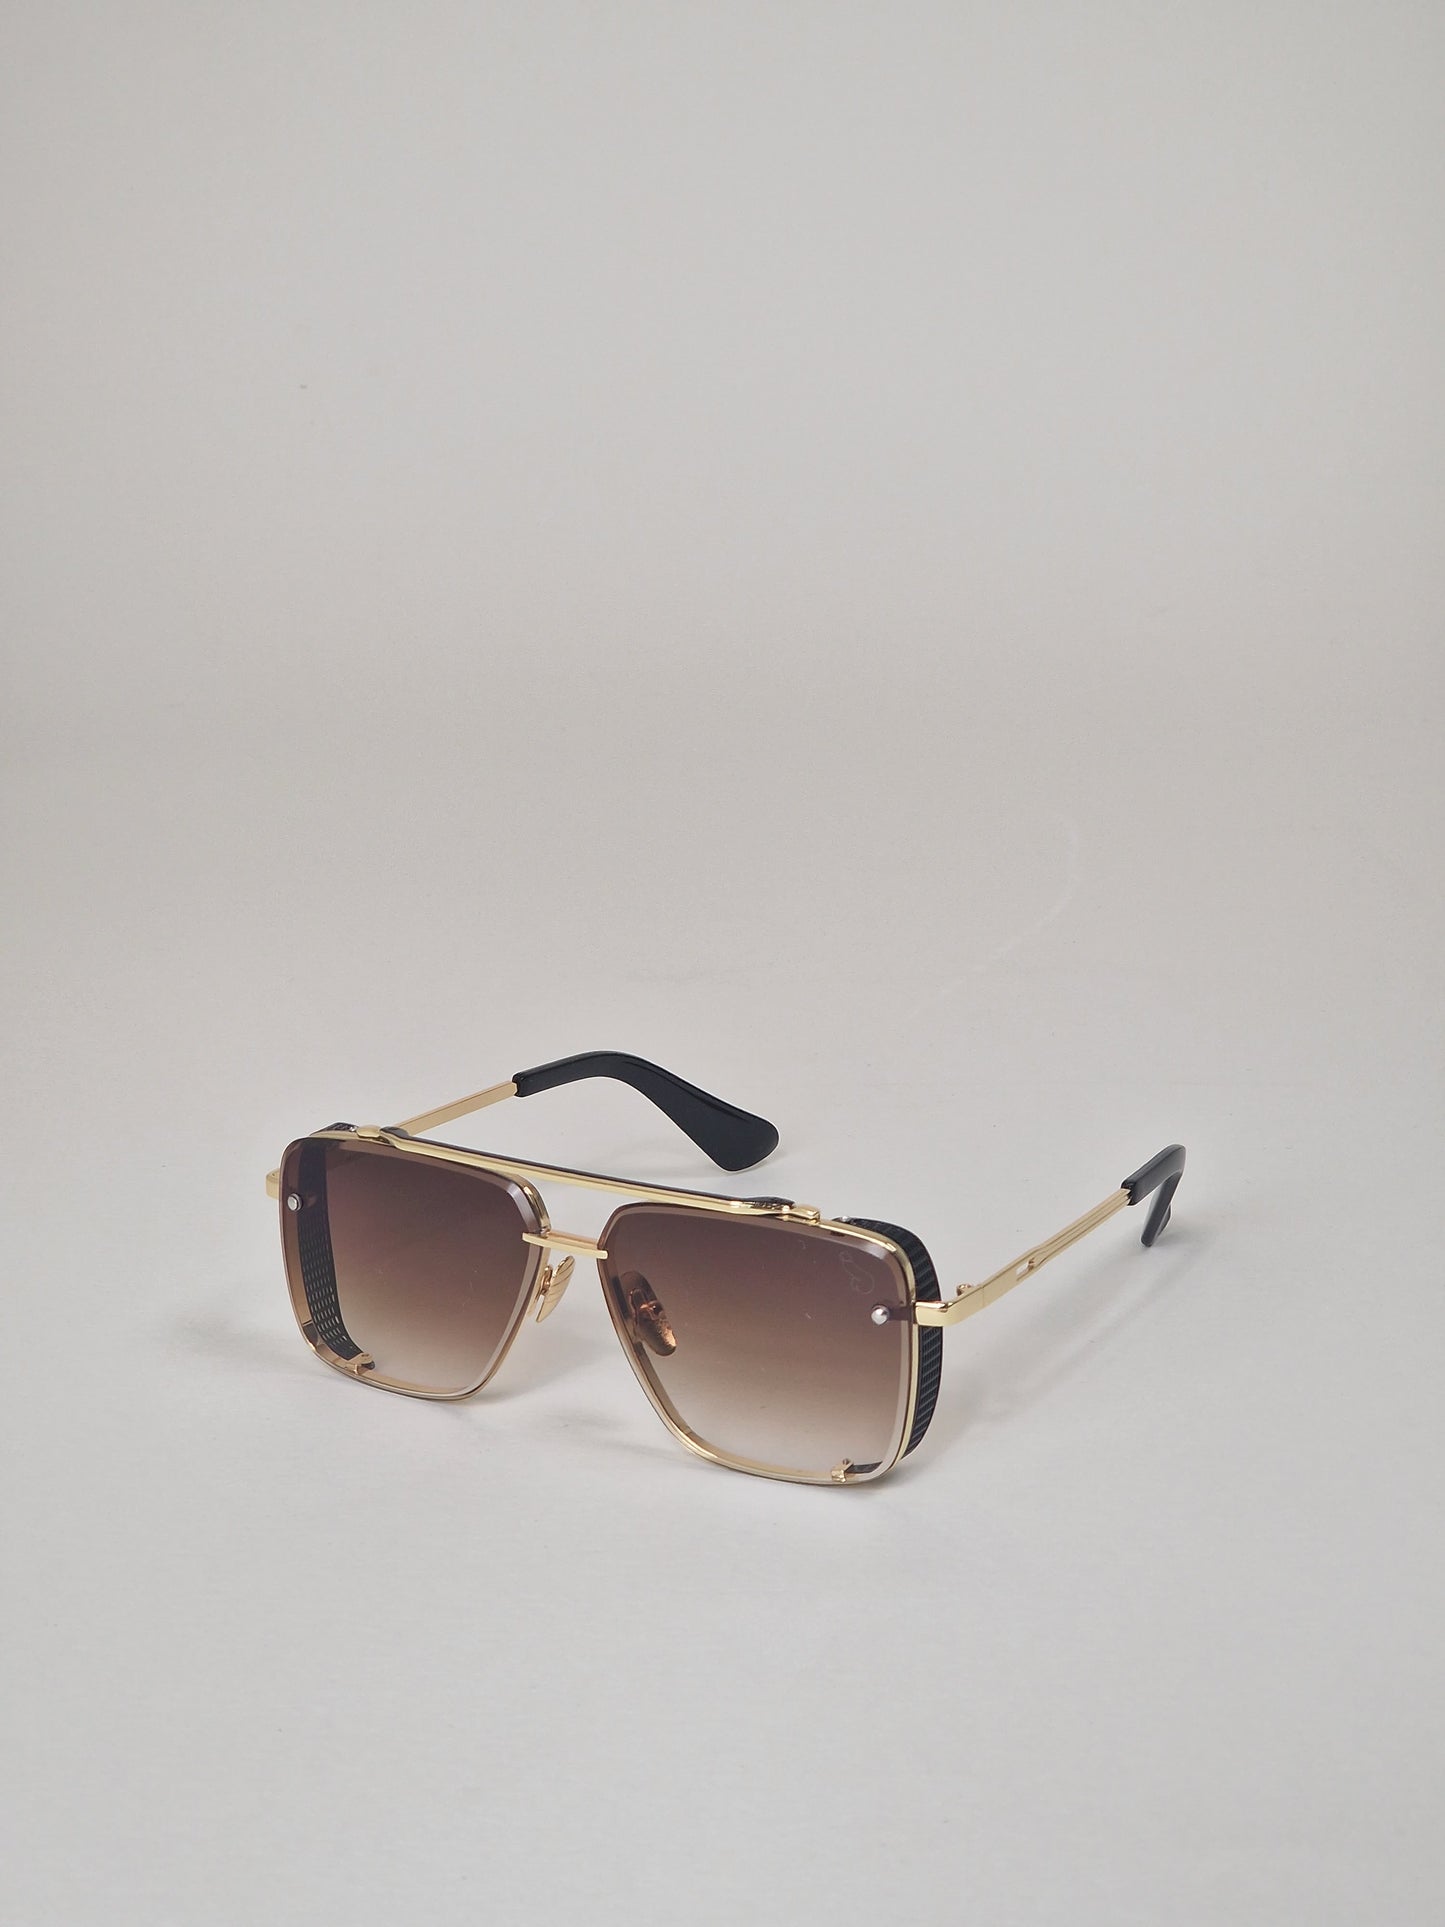 Sunglasses, model 32 - Brown tinted.